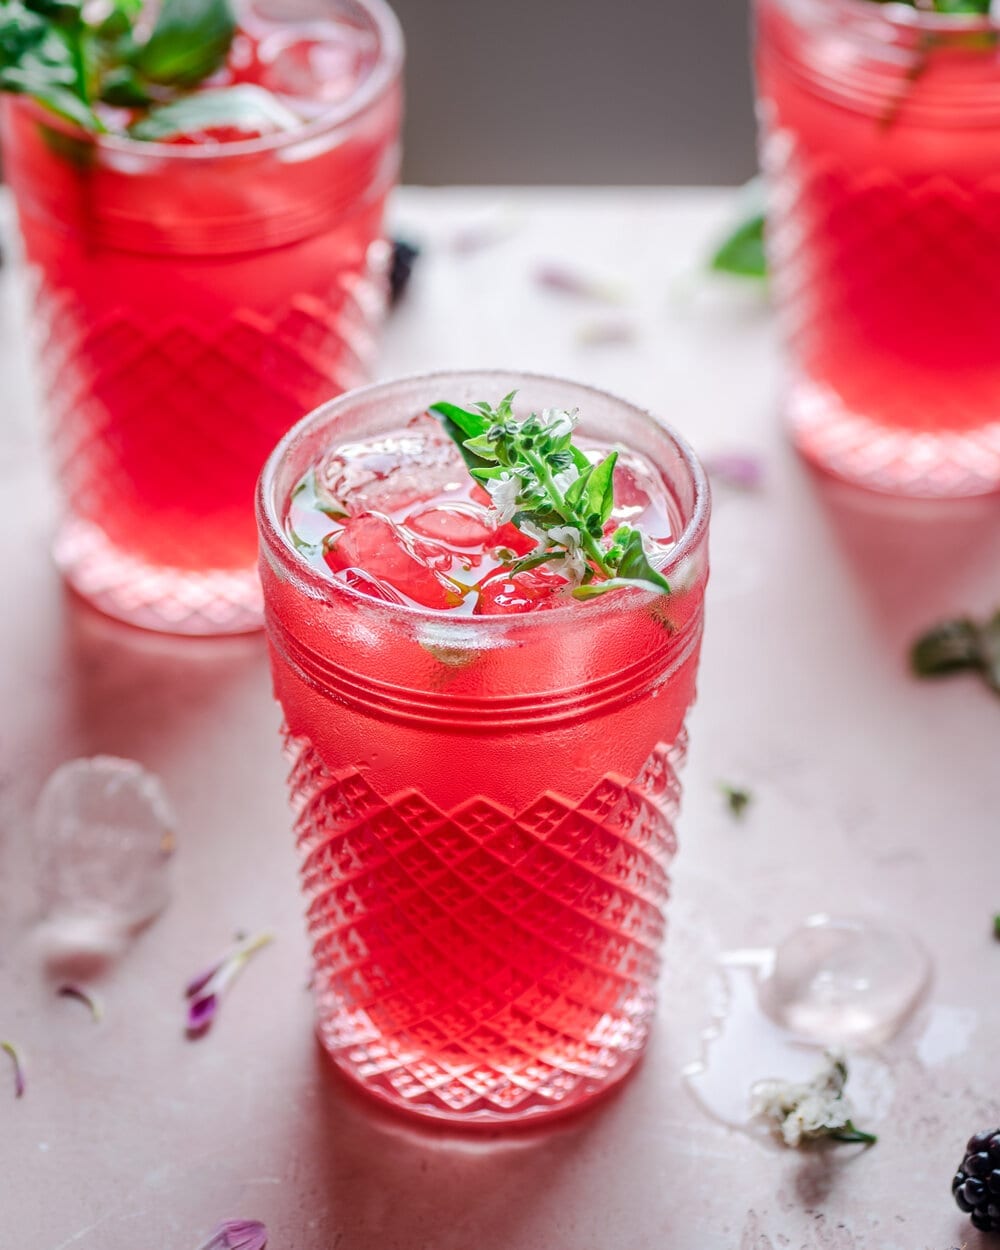 Three glasses of blackberry lemonade on a pink table.